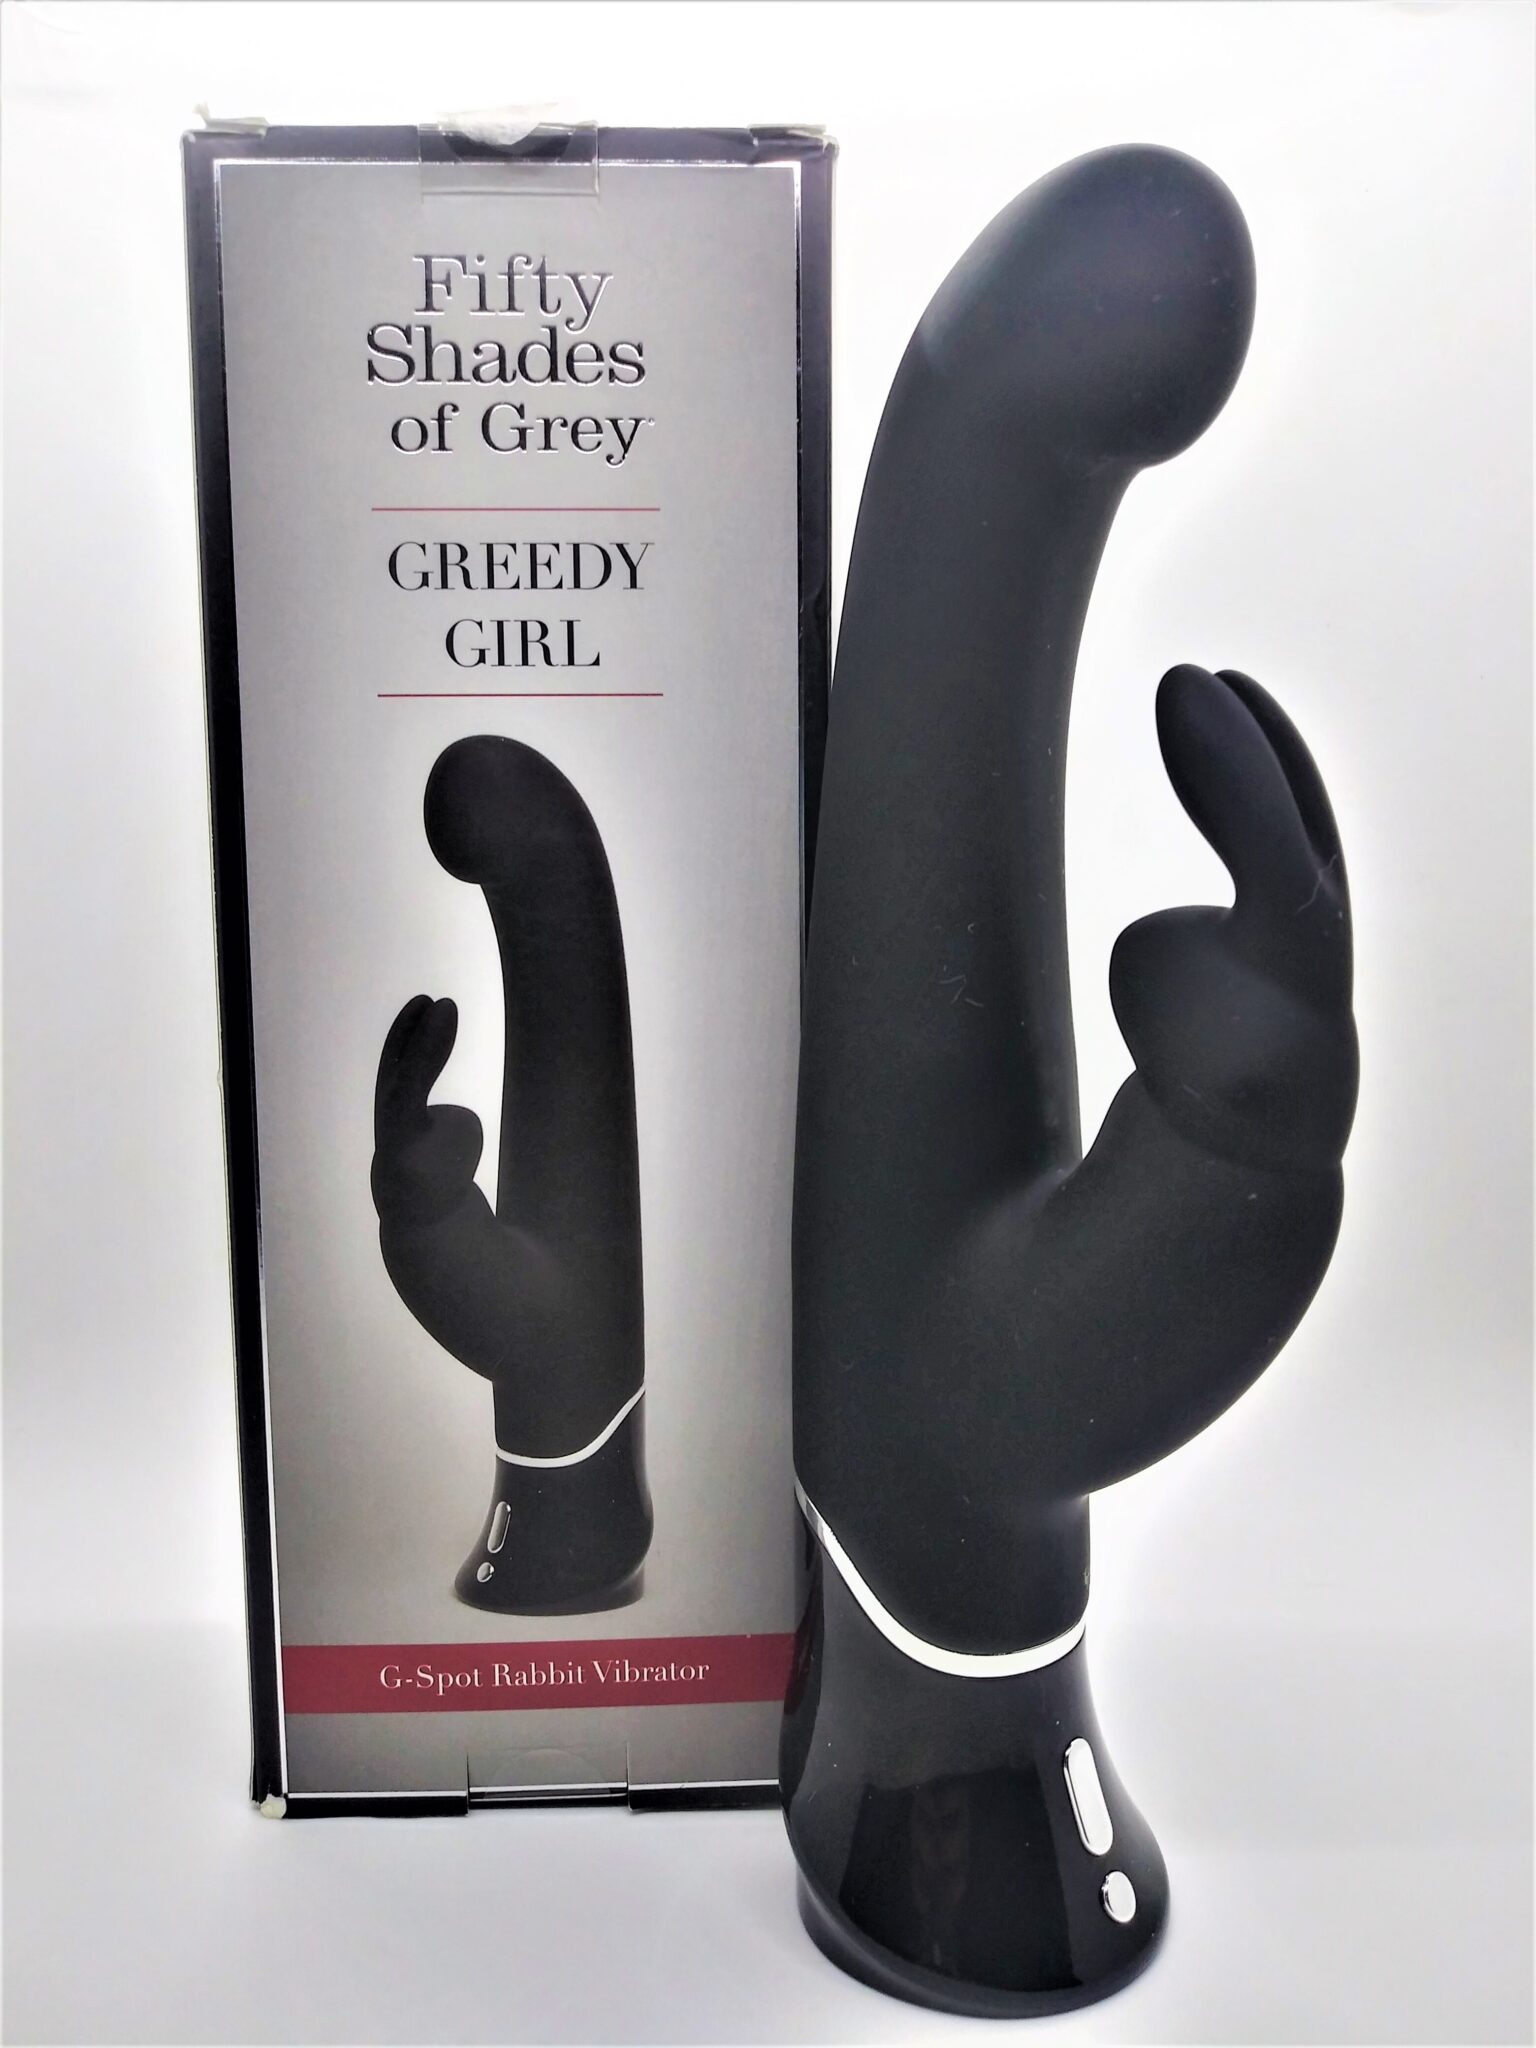 Fifty Shades of Grey Greedy Girl G-Spot Rabbit Vibrator. Slide 2